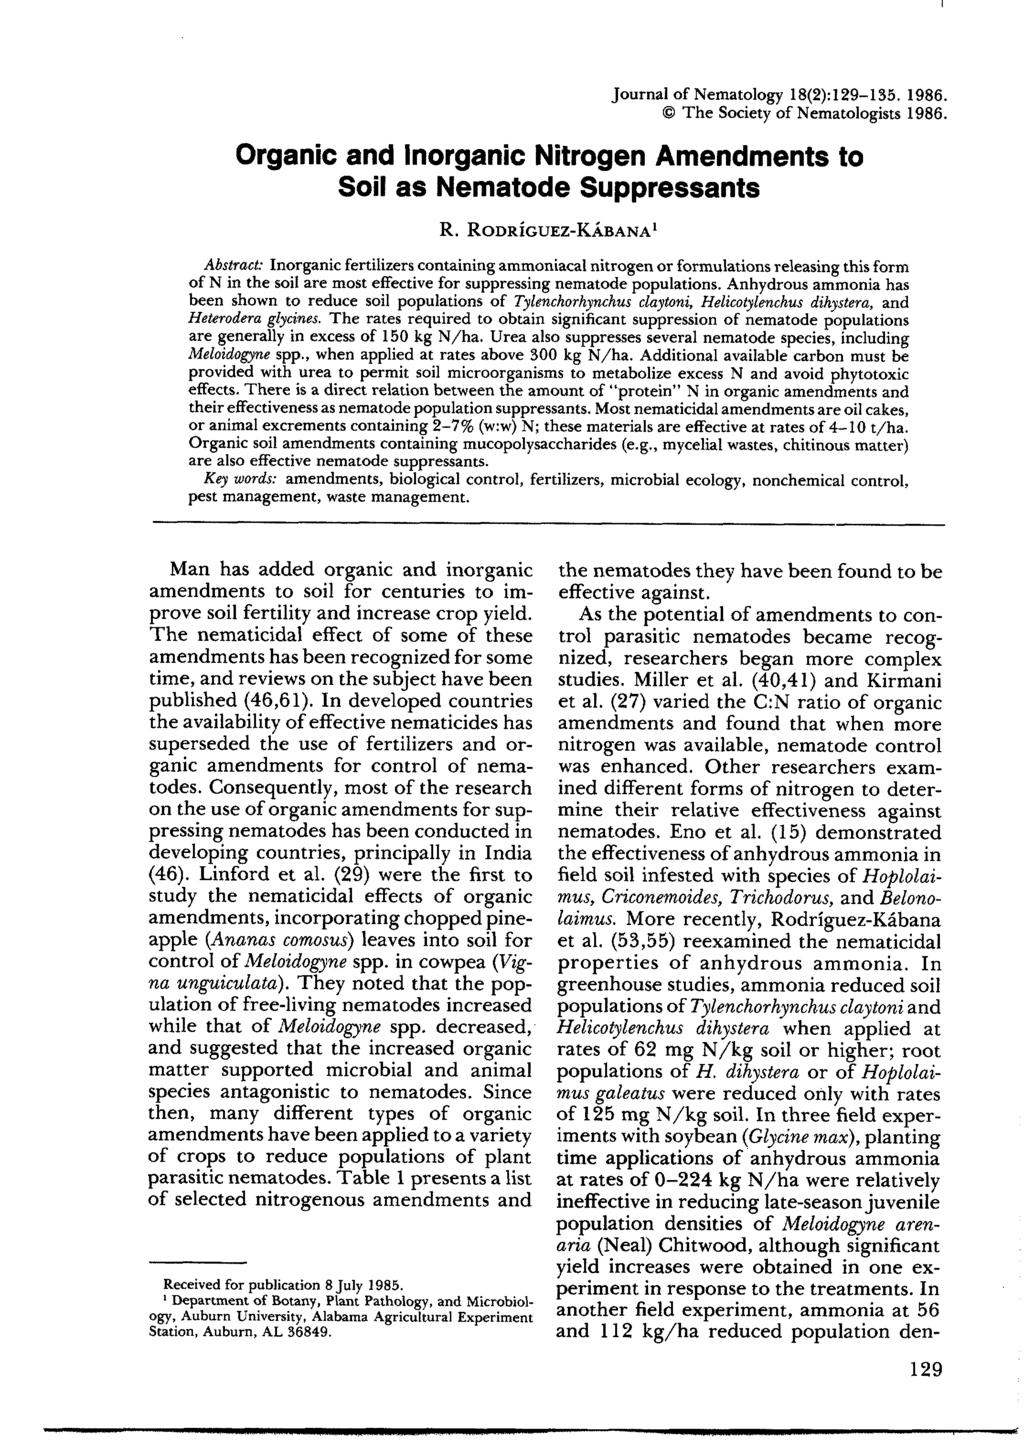 Journal of Nematology 18(2):129-135. 1986. The Society of Nematologists 1986. Organic and Inorganic Nitrogen Amendments to Soil as Nematode Suppressants R. RODRiGUEz-K.